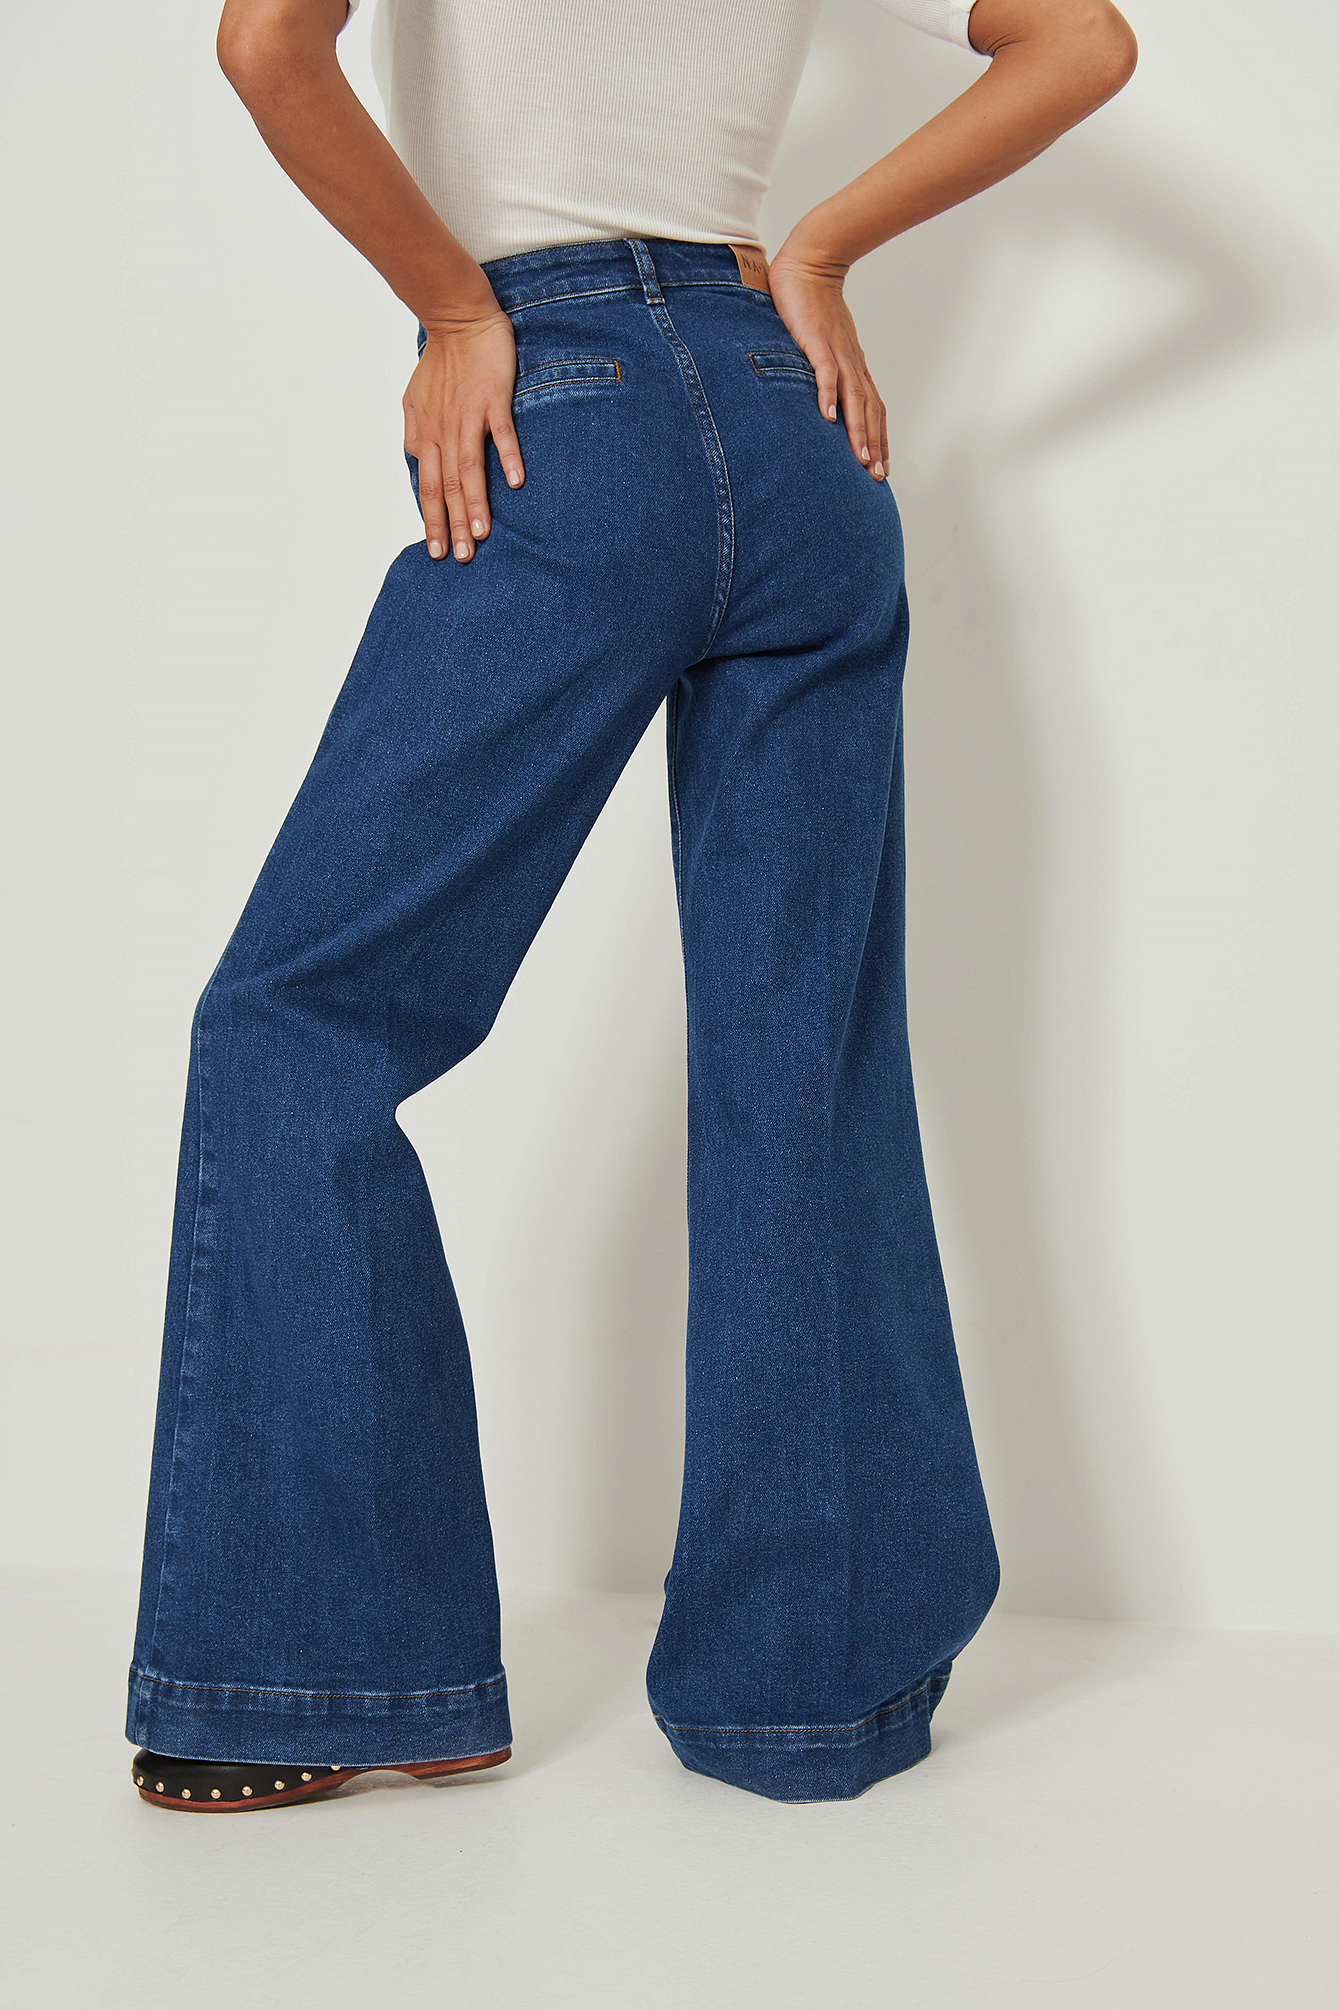 Rabatt 67 % DAMEN Jeans Flared jeans Print Blau 38 Sahoco Flared jeans 